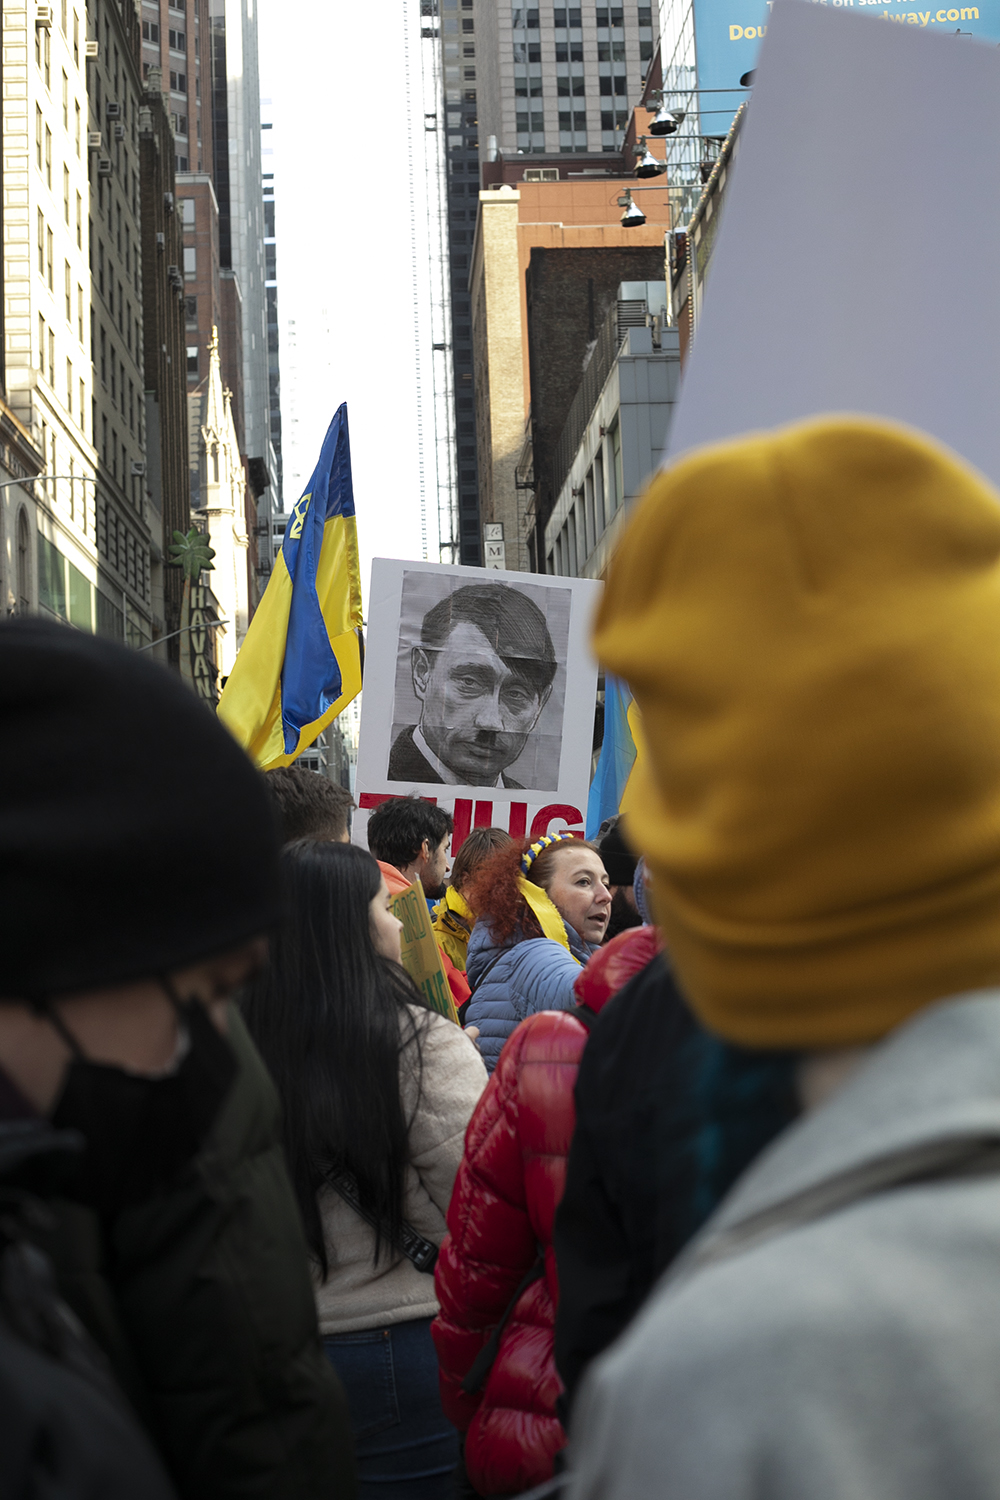 Ukraine War protest: Times Square